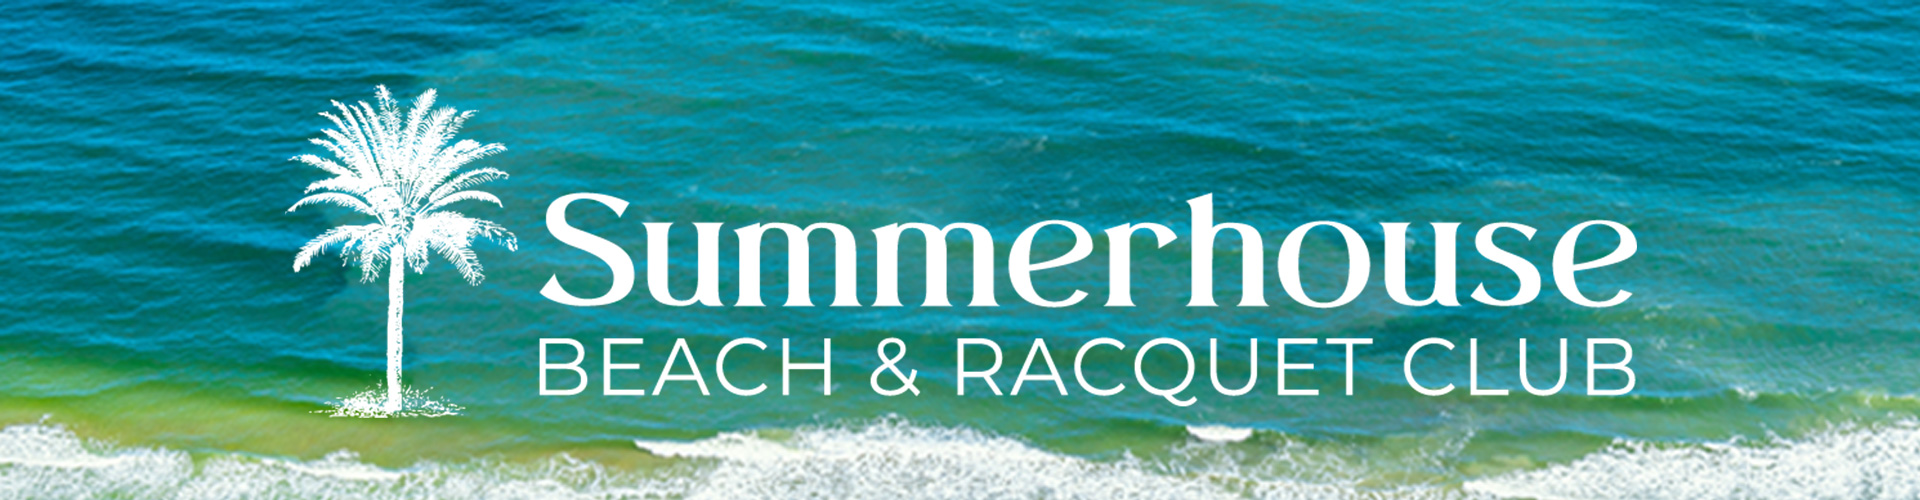 Summerhouse Beach & Racquet Club Banner